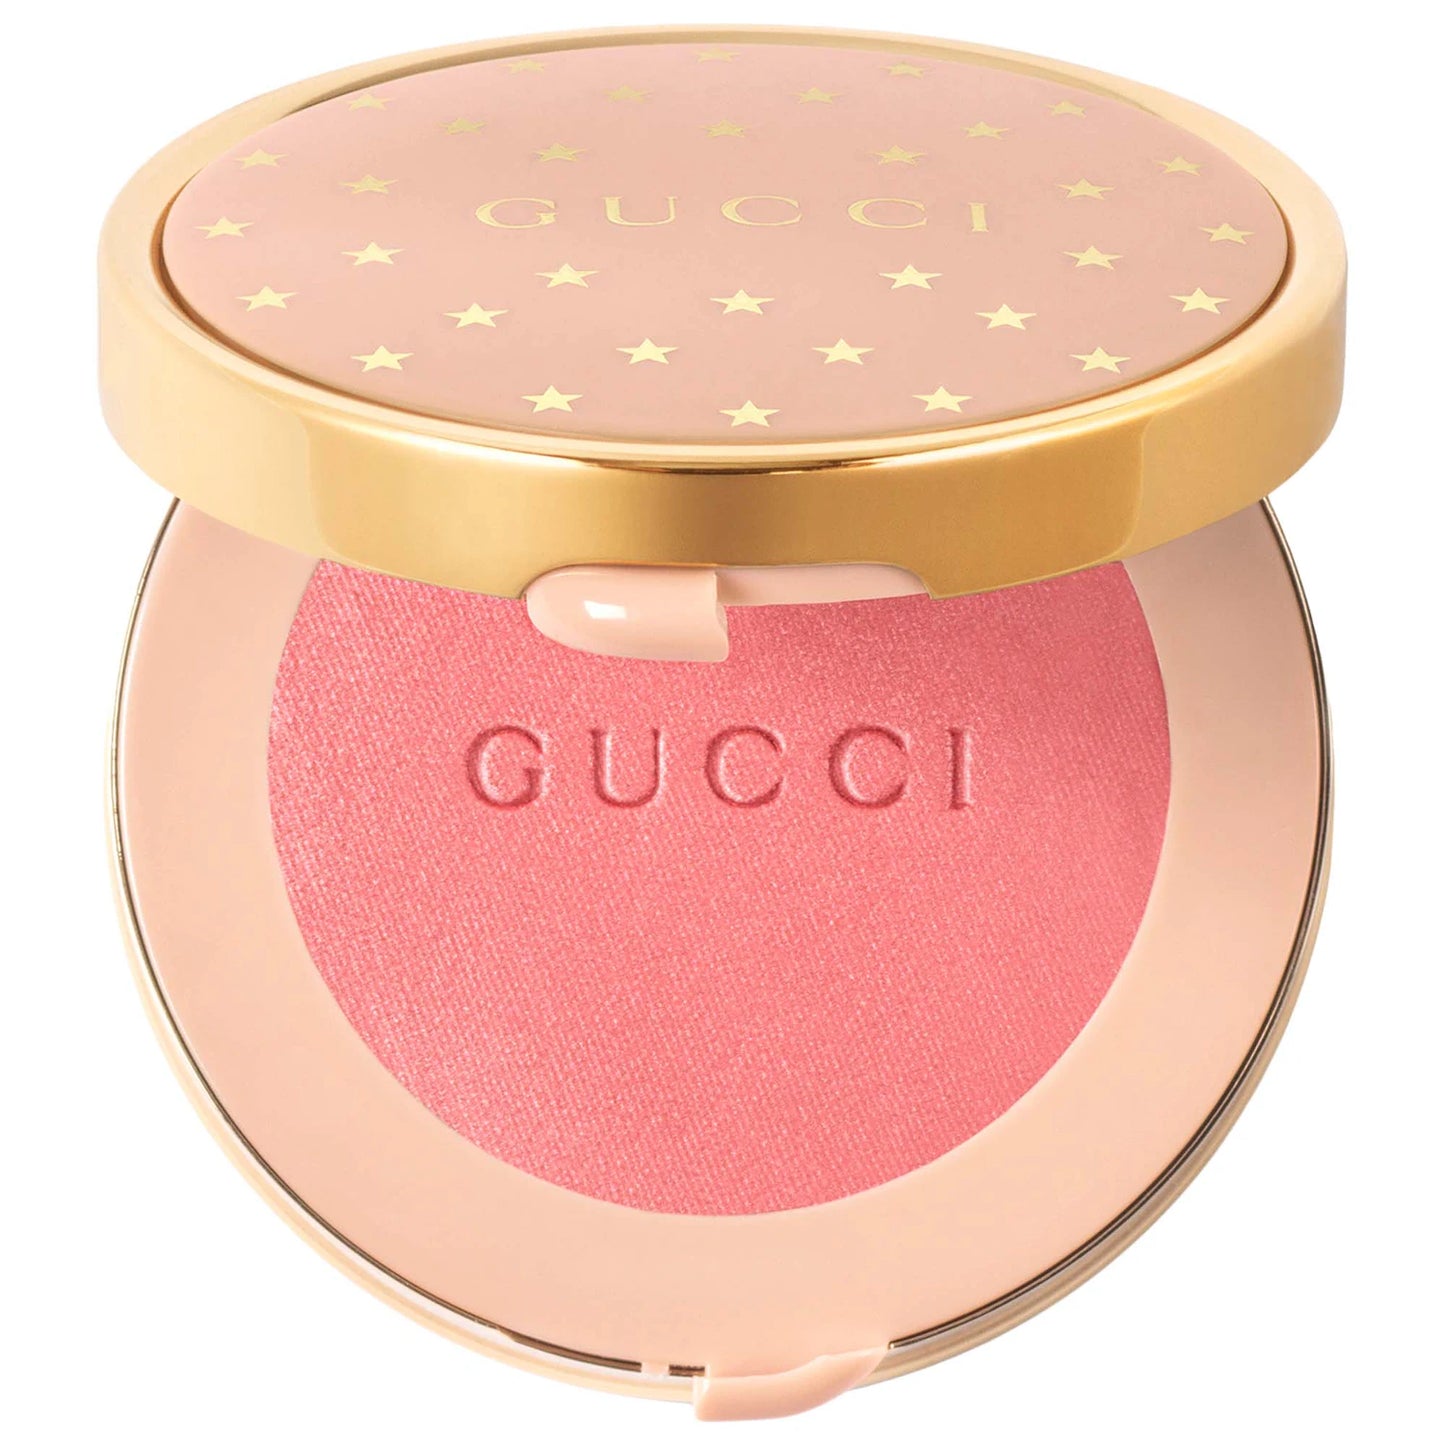 Gucci Luminous Matte Beauty Blush *pre-order*